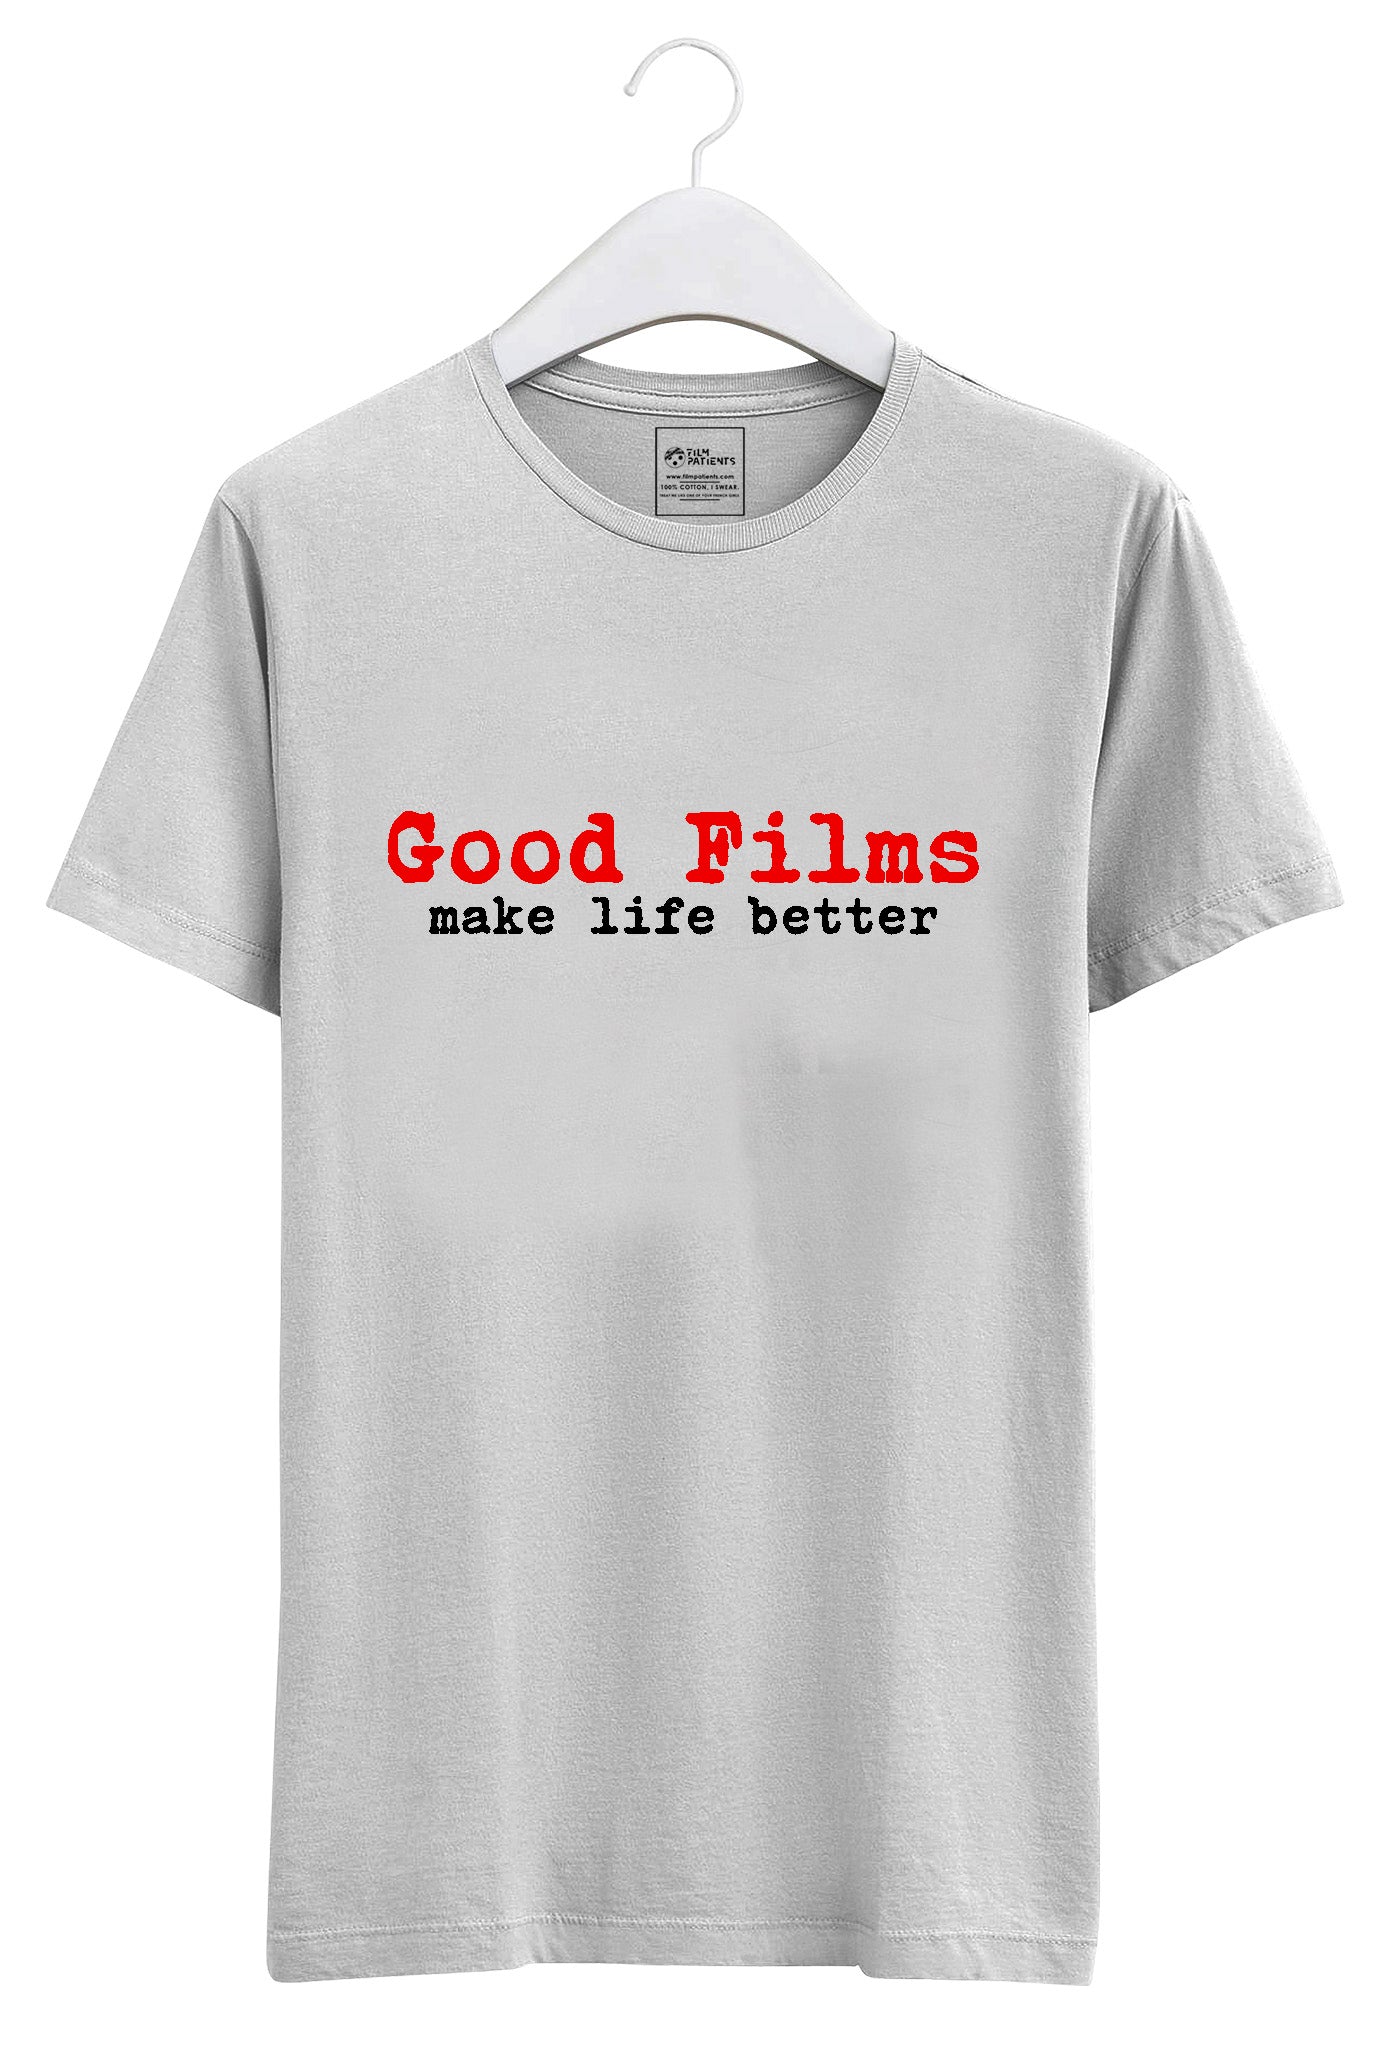 Good Films make Life Better Tshirt